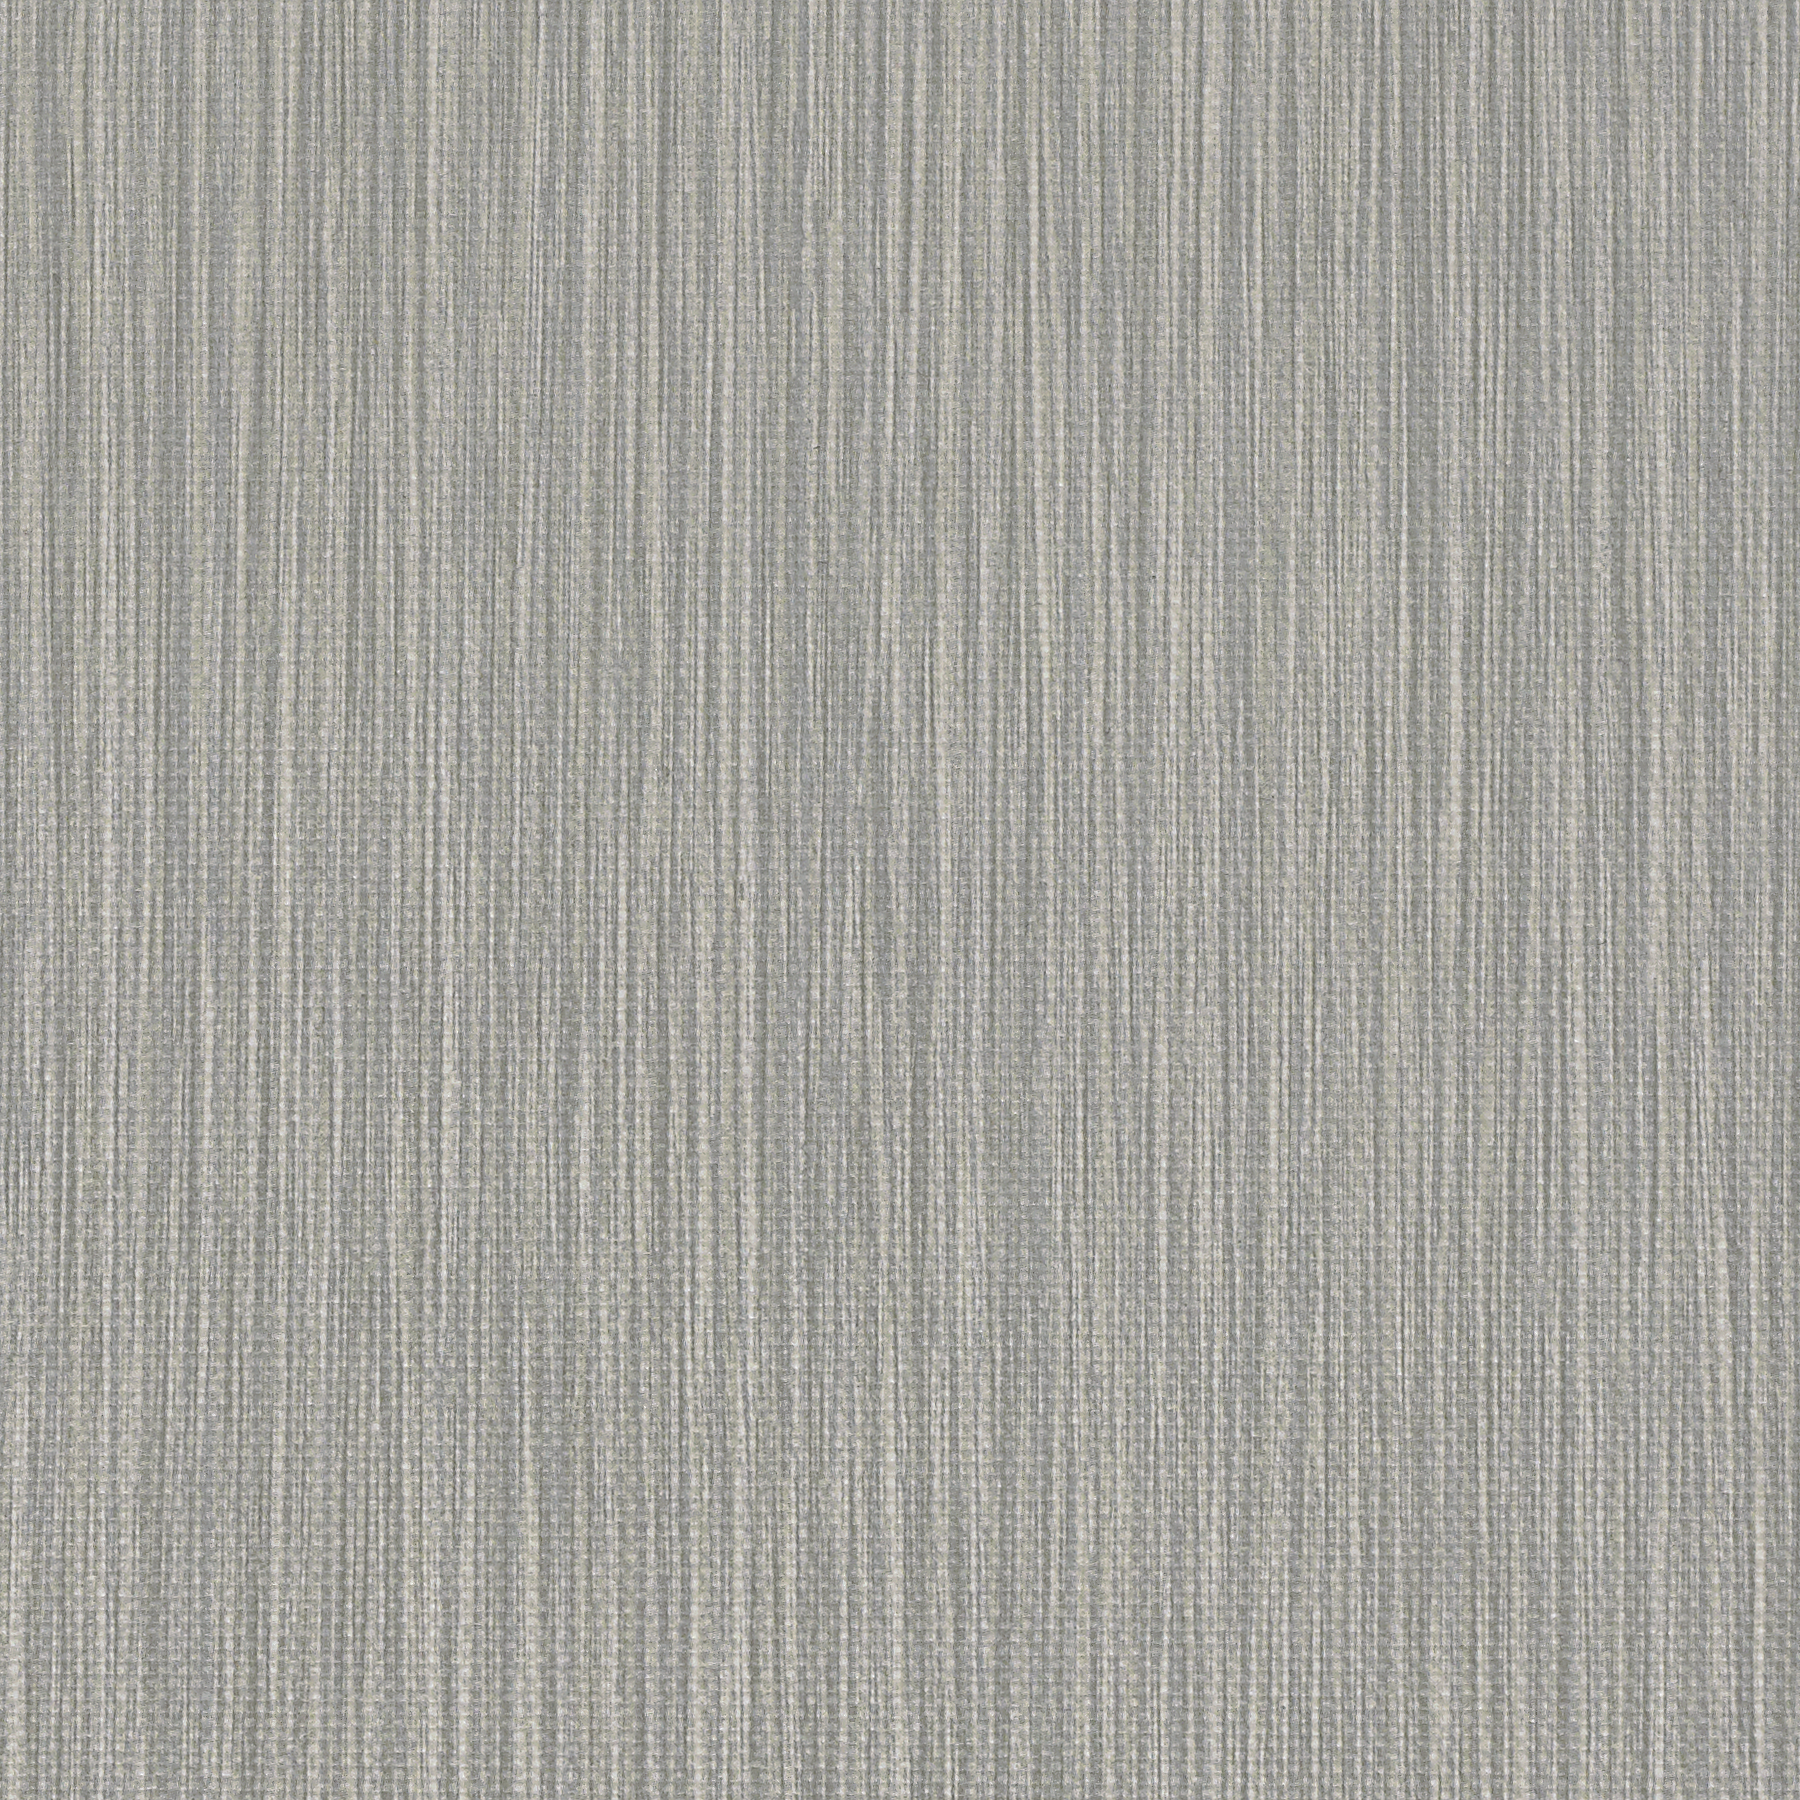 Overcast - Strum - Textiles - Materials - Herman Miller